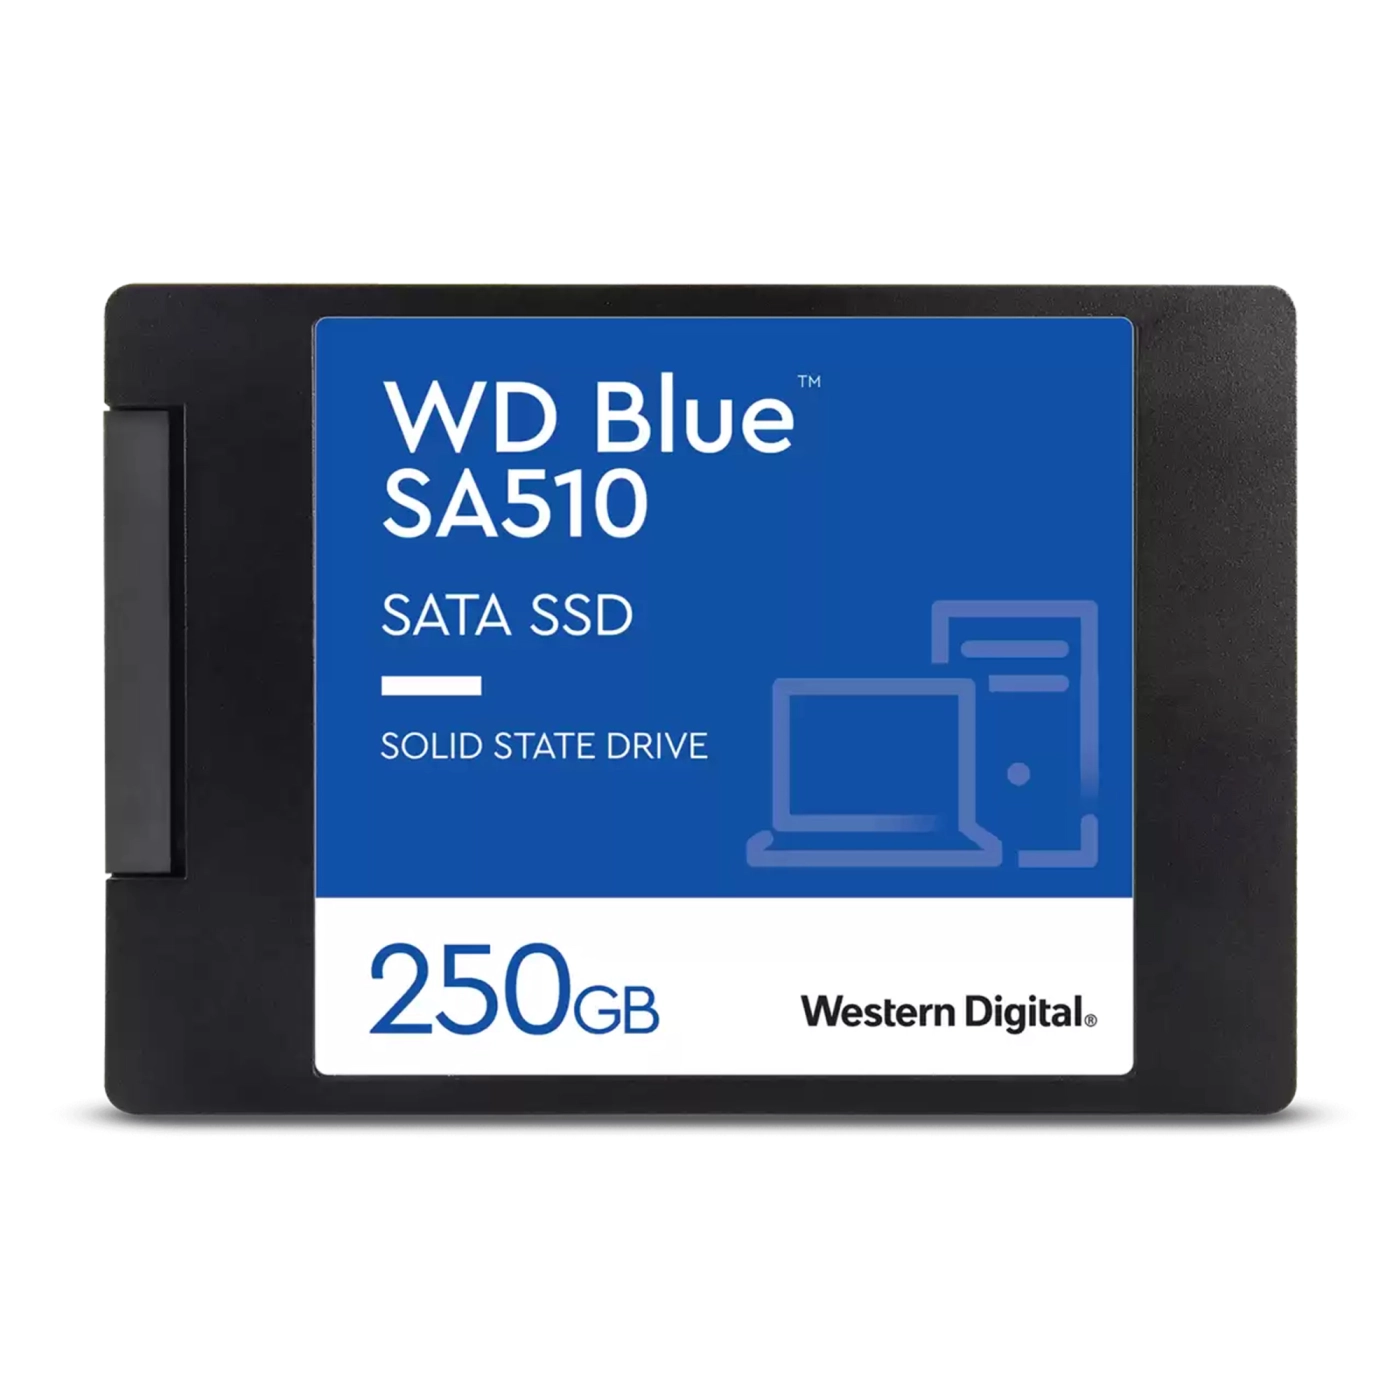 Купить SSD диск WD Blue SA510 250GB 2.5" SATA (WDS250G3B0A) - фото 1